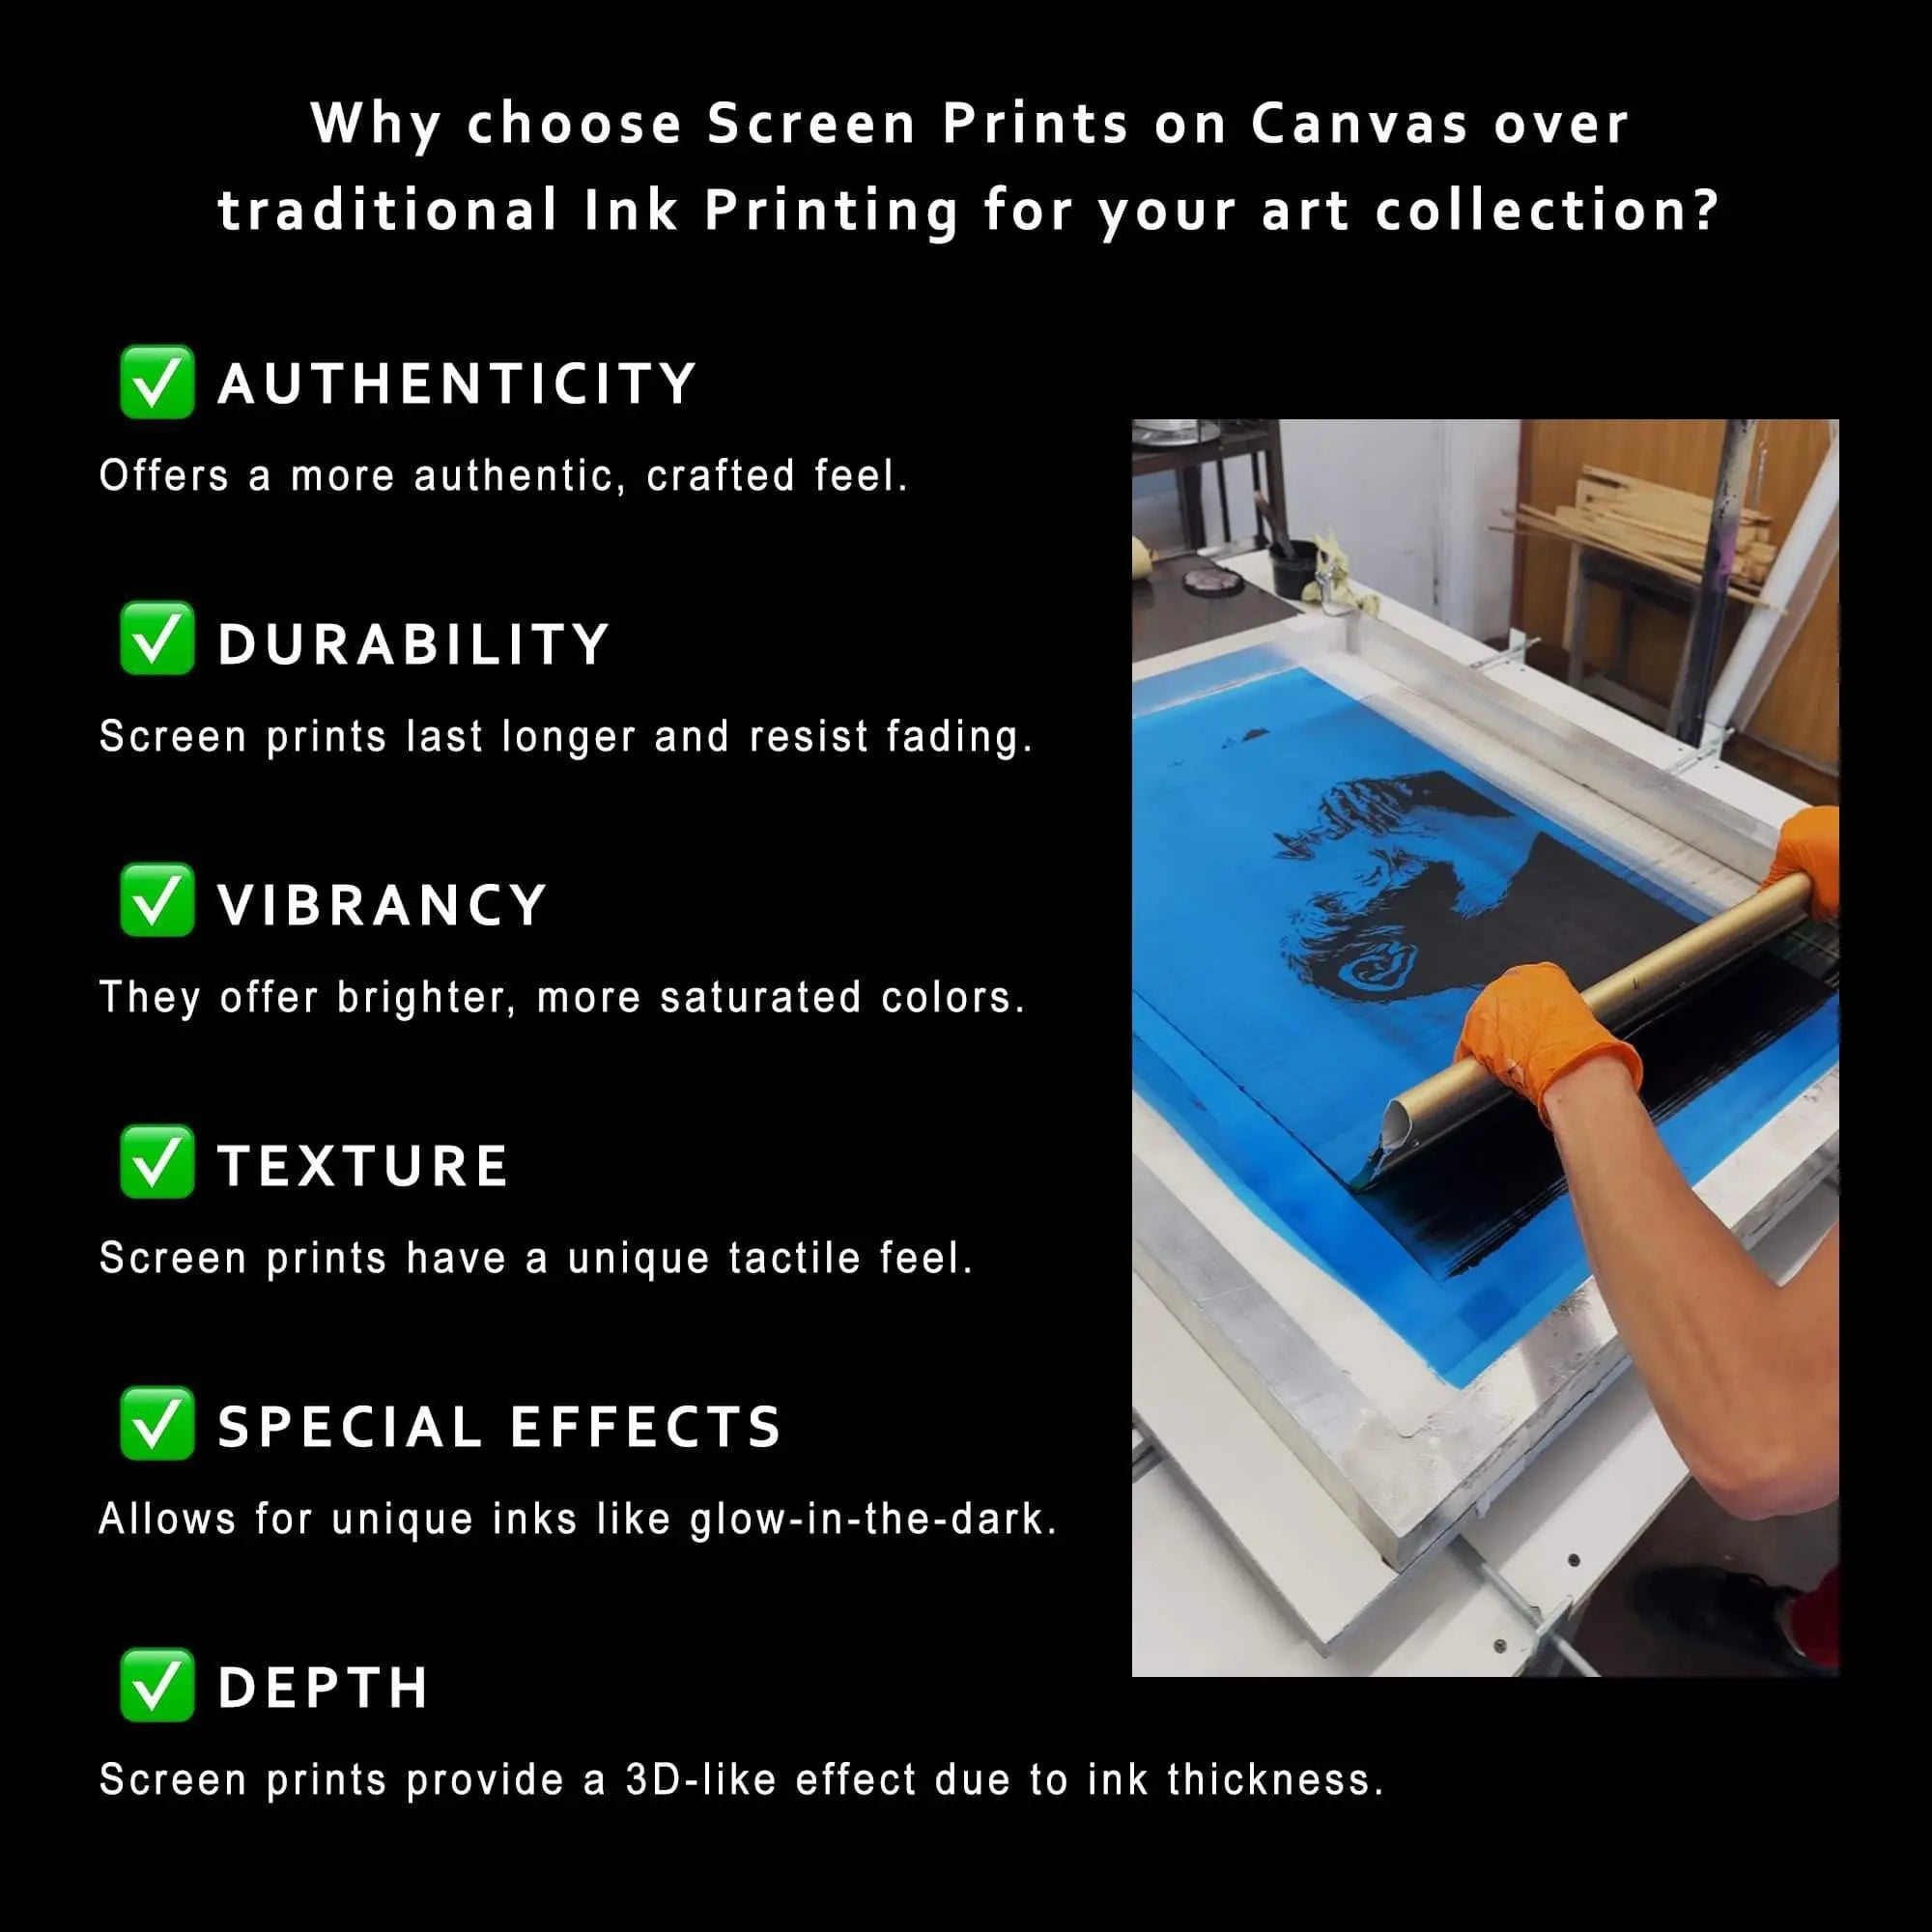 Detailed description of Screen art printing process